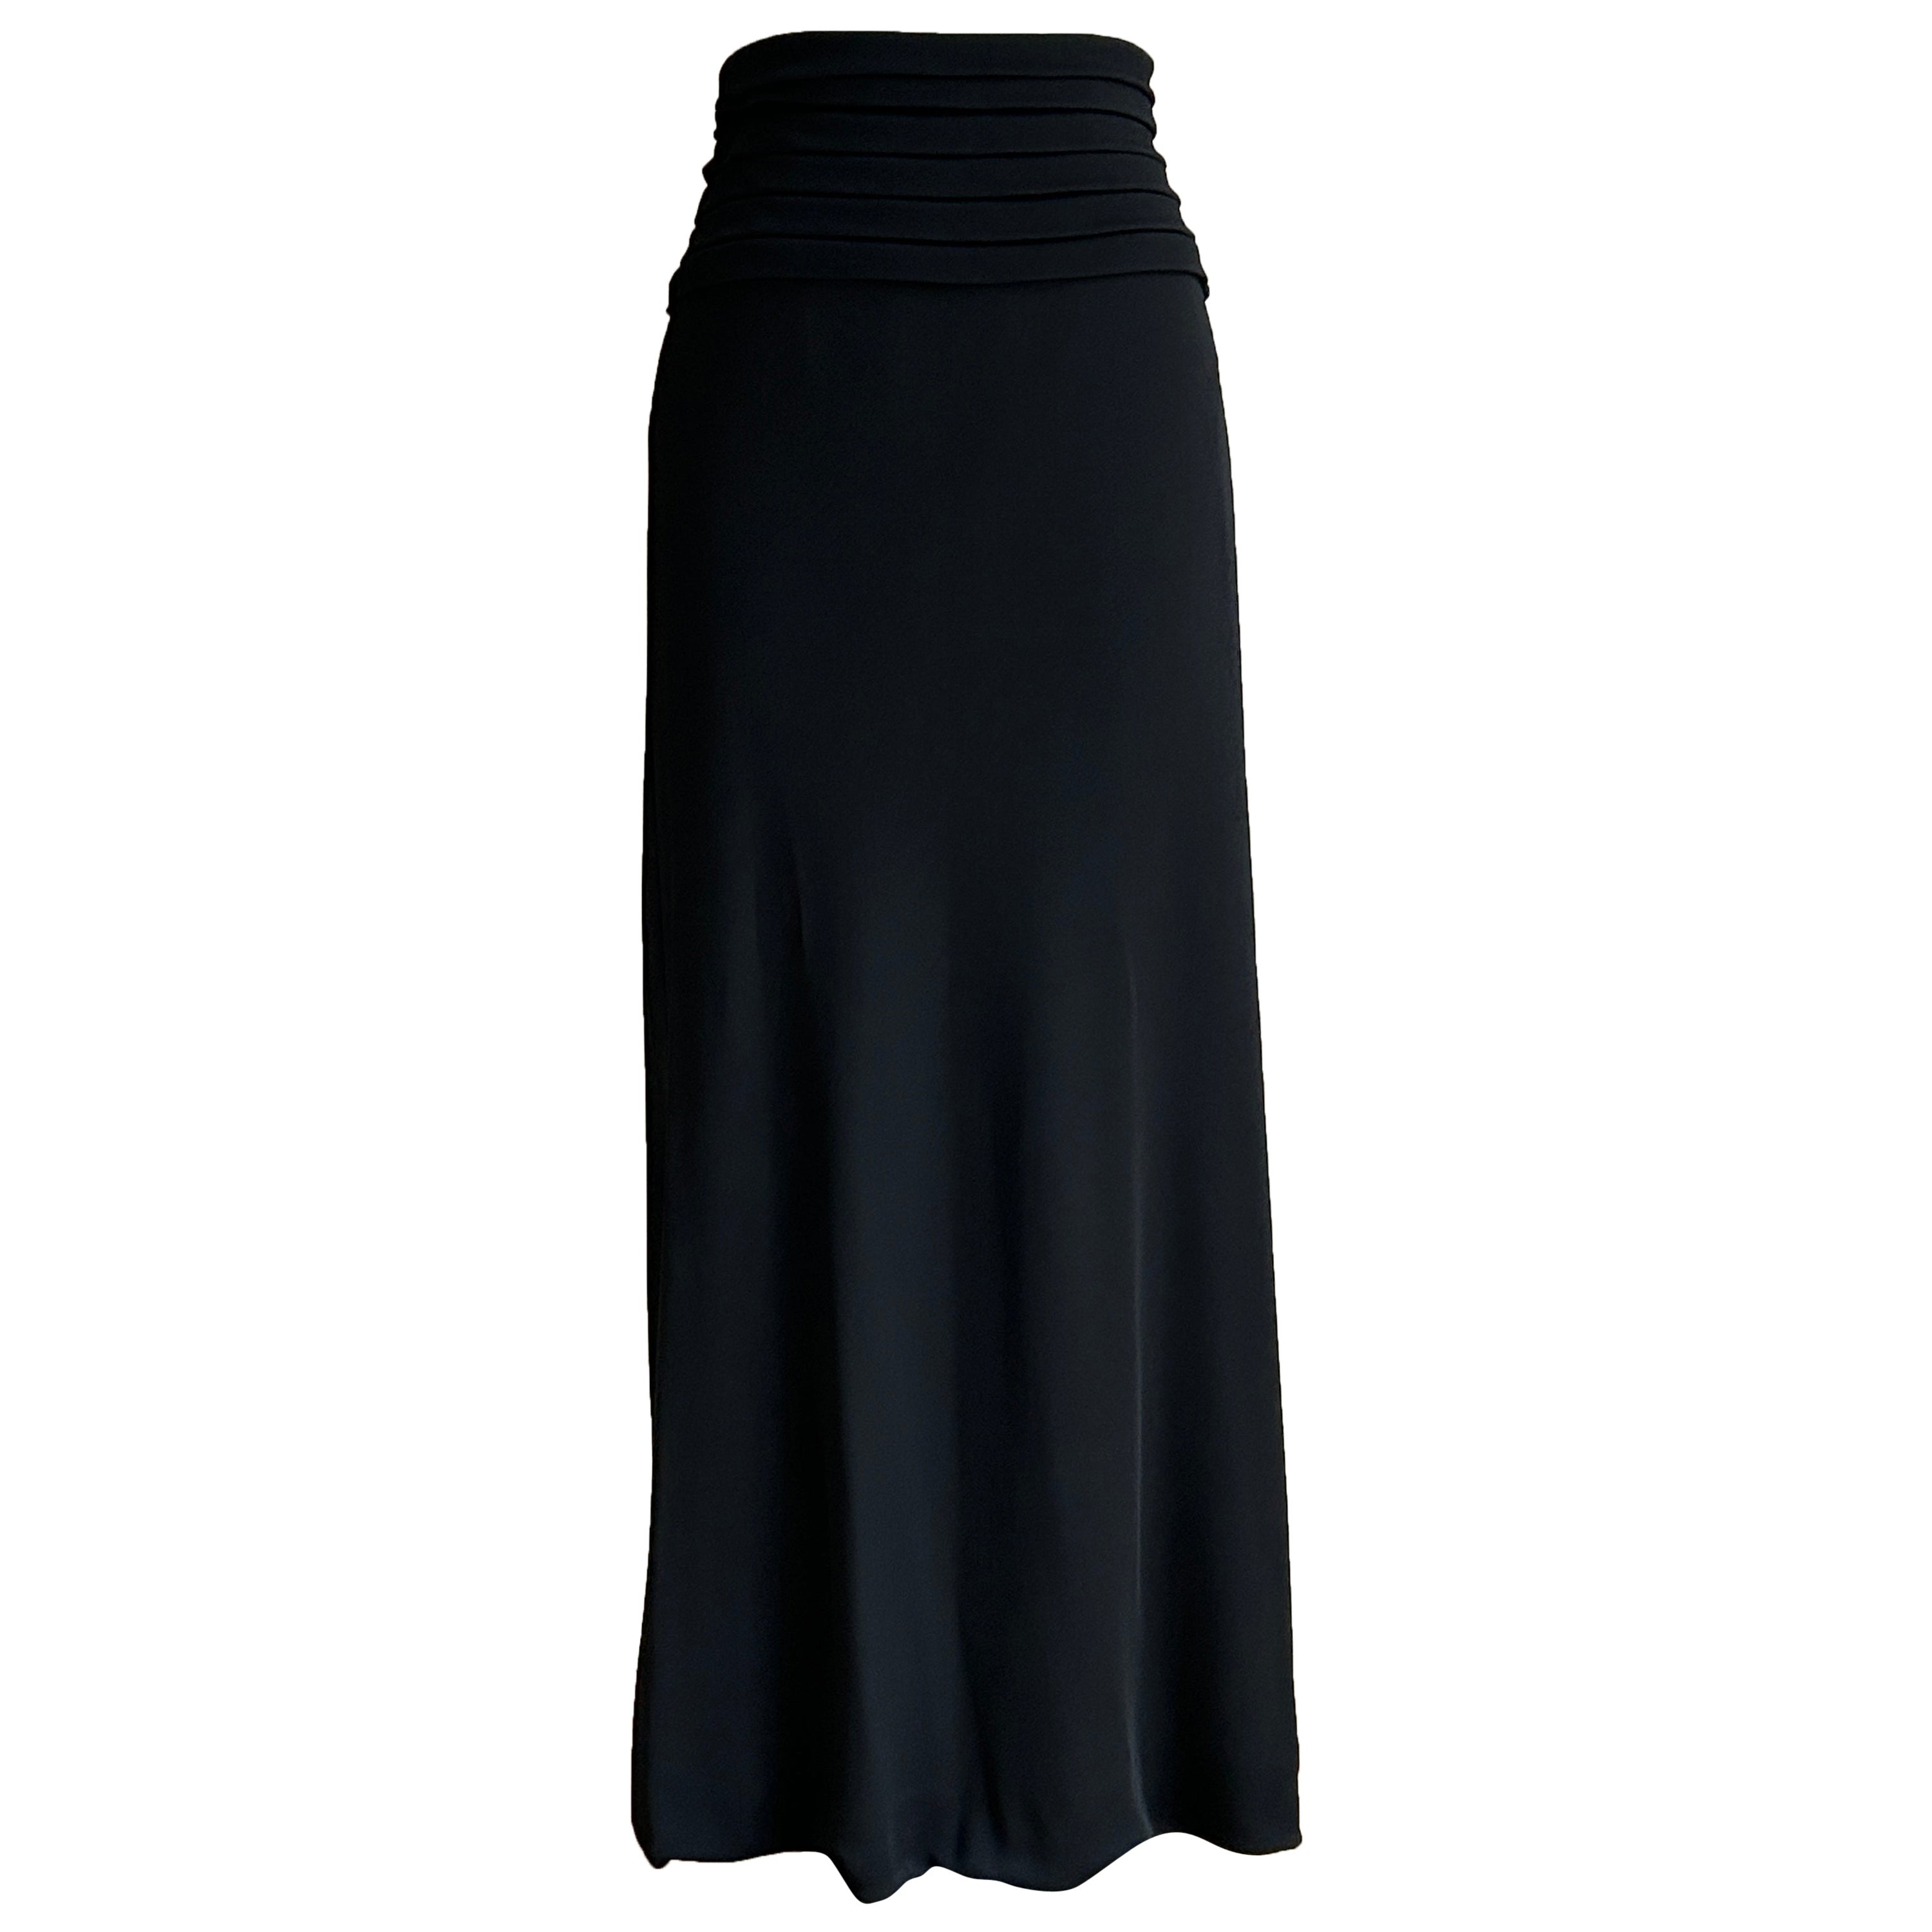 Giorgio Armani Unworn 1990s Black Midi Skirt with Pleat Detail at Waist For Sale